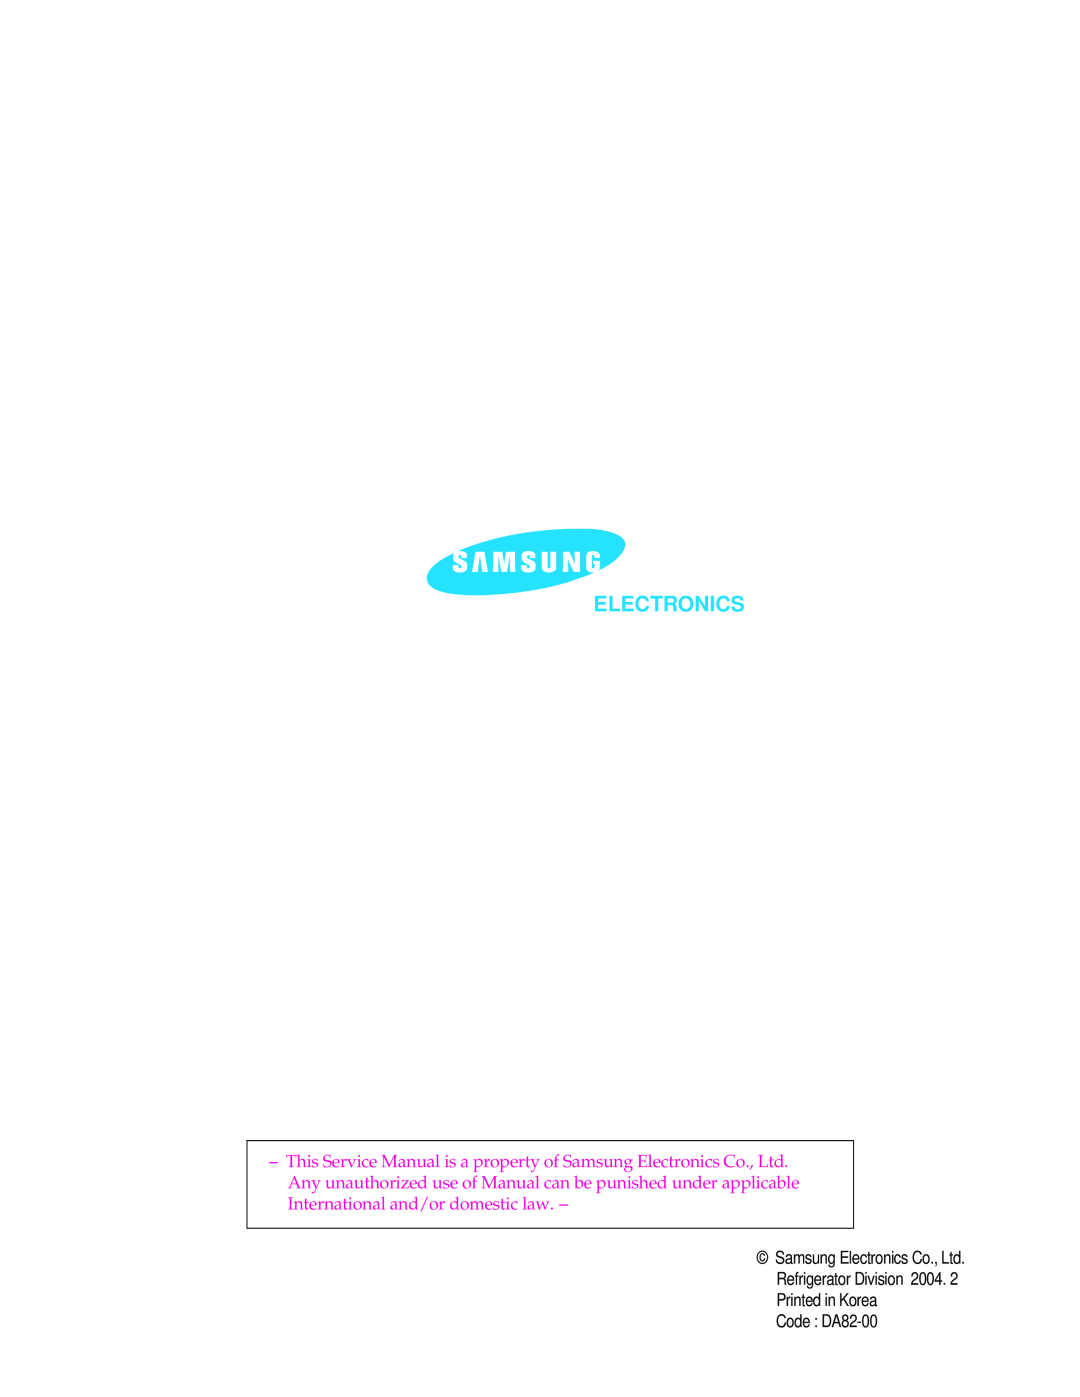 Samsung RS2*3* manual Electronics, 272, Oseon-Dong, Kwangsan-Gu Kwangju-City,Korea, TEL 82-62-950-6810,6811 FAX 